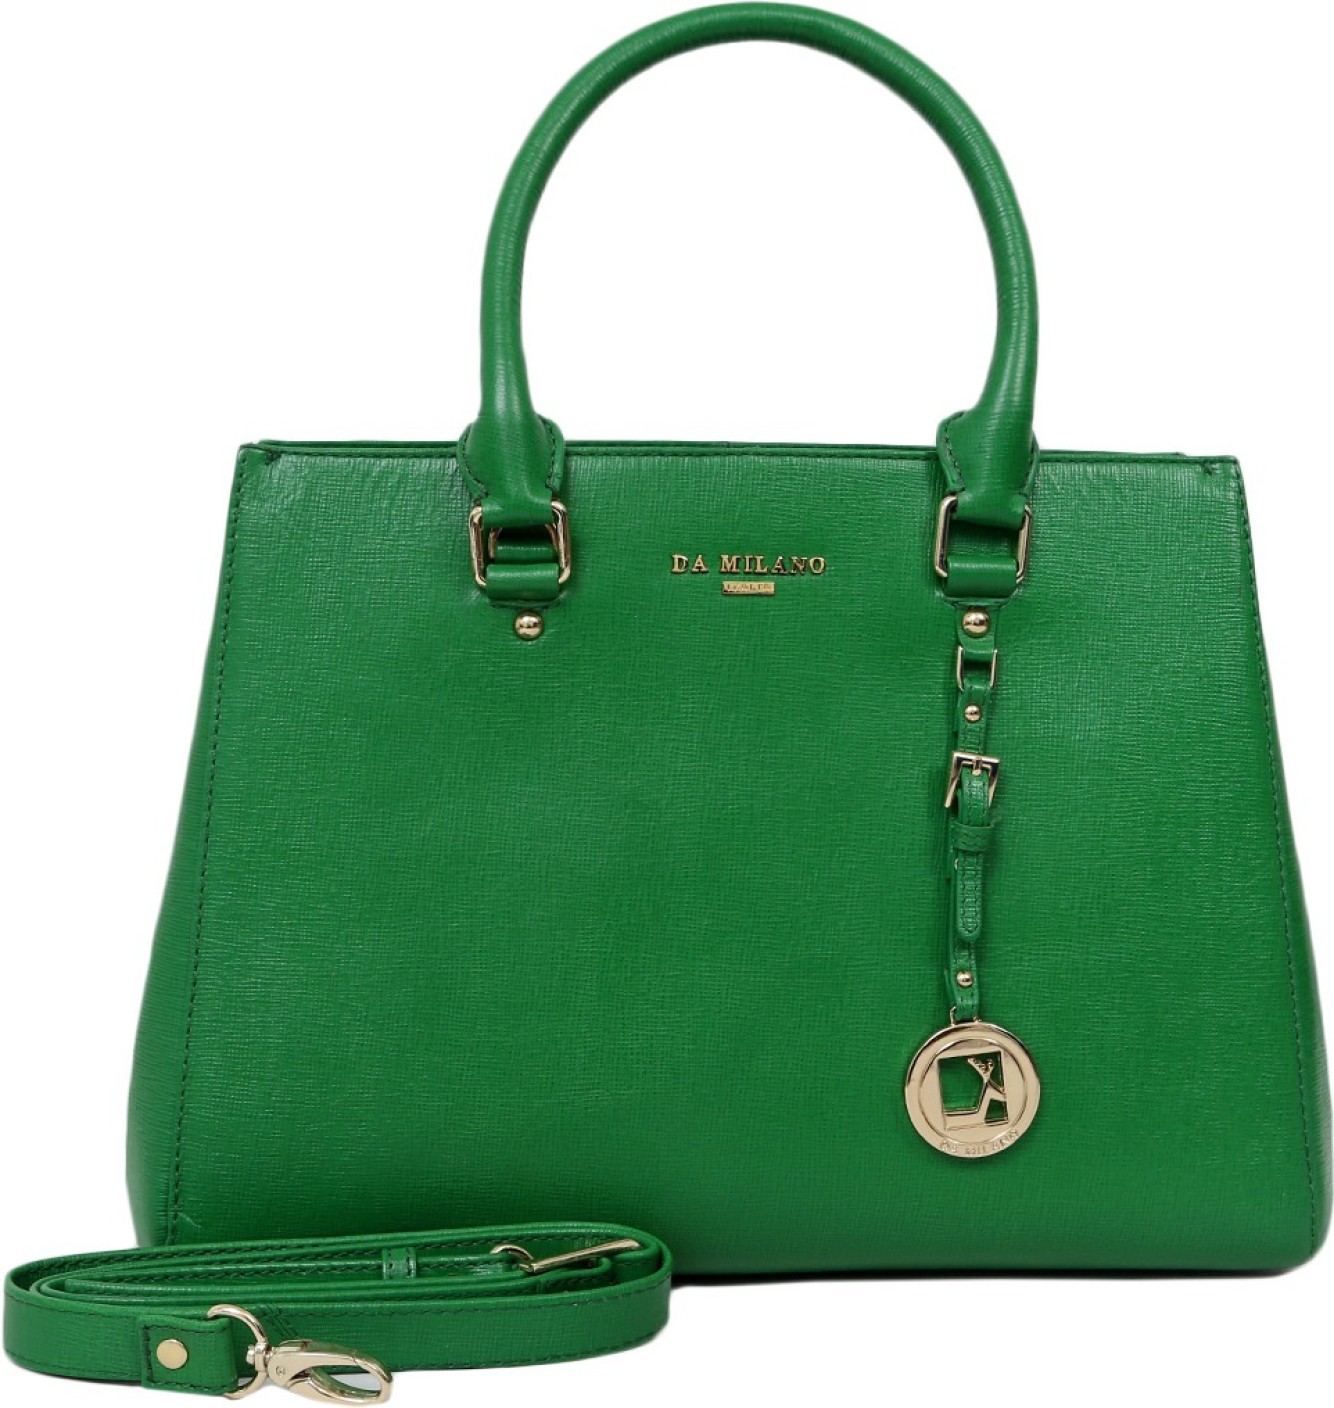 Buy Da Milano Shoulder Bag GREEN Online @ Best Price in India ...